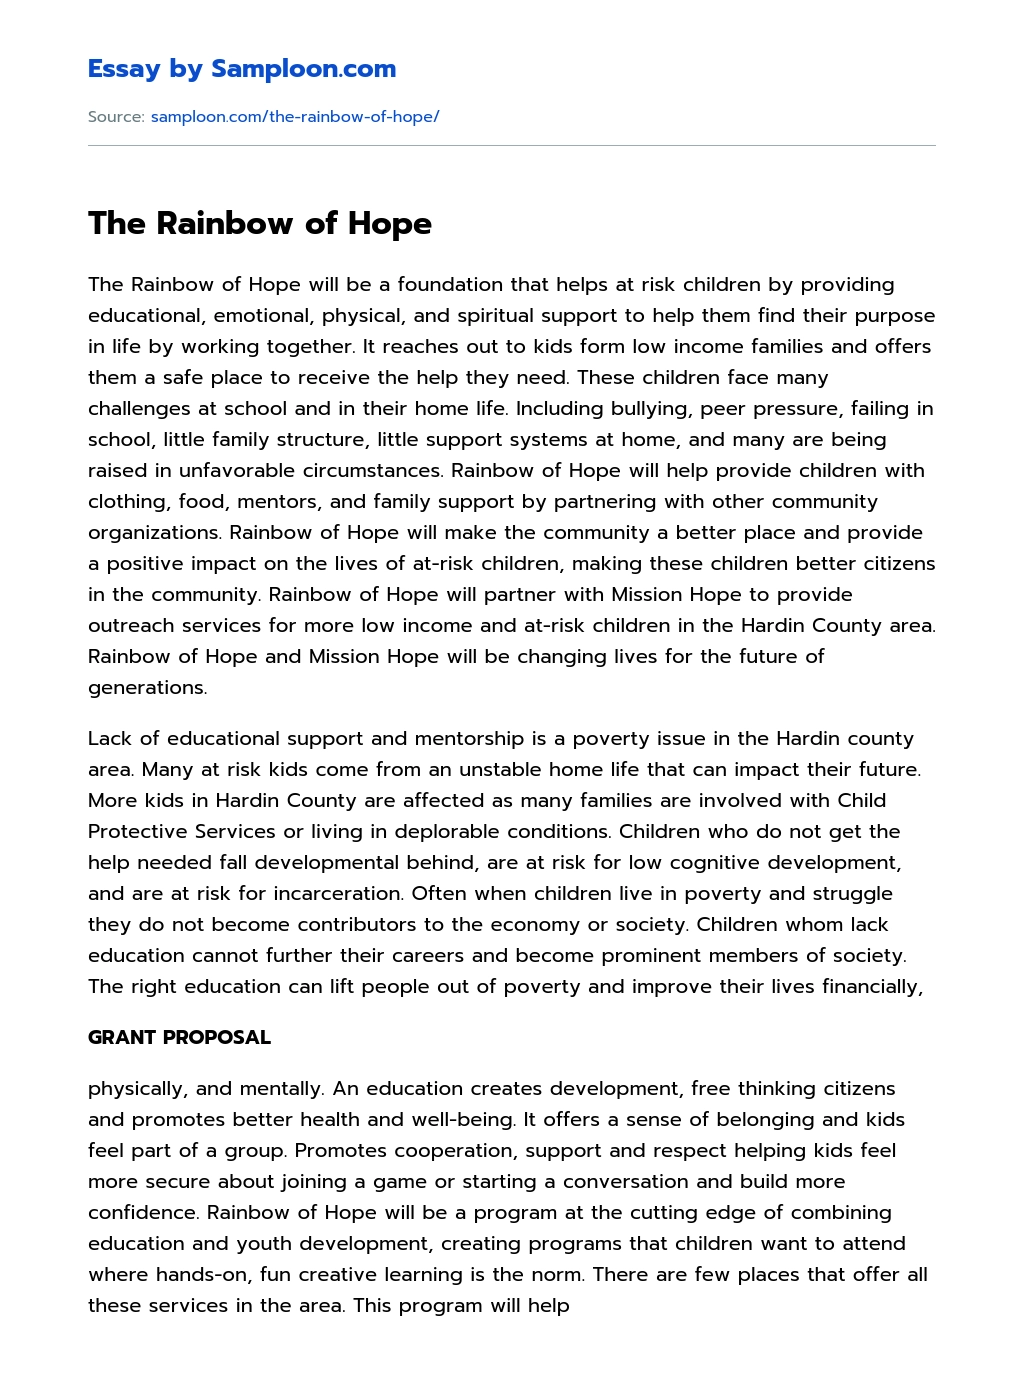 The Rainbow of Hope essay